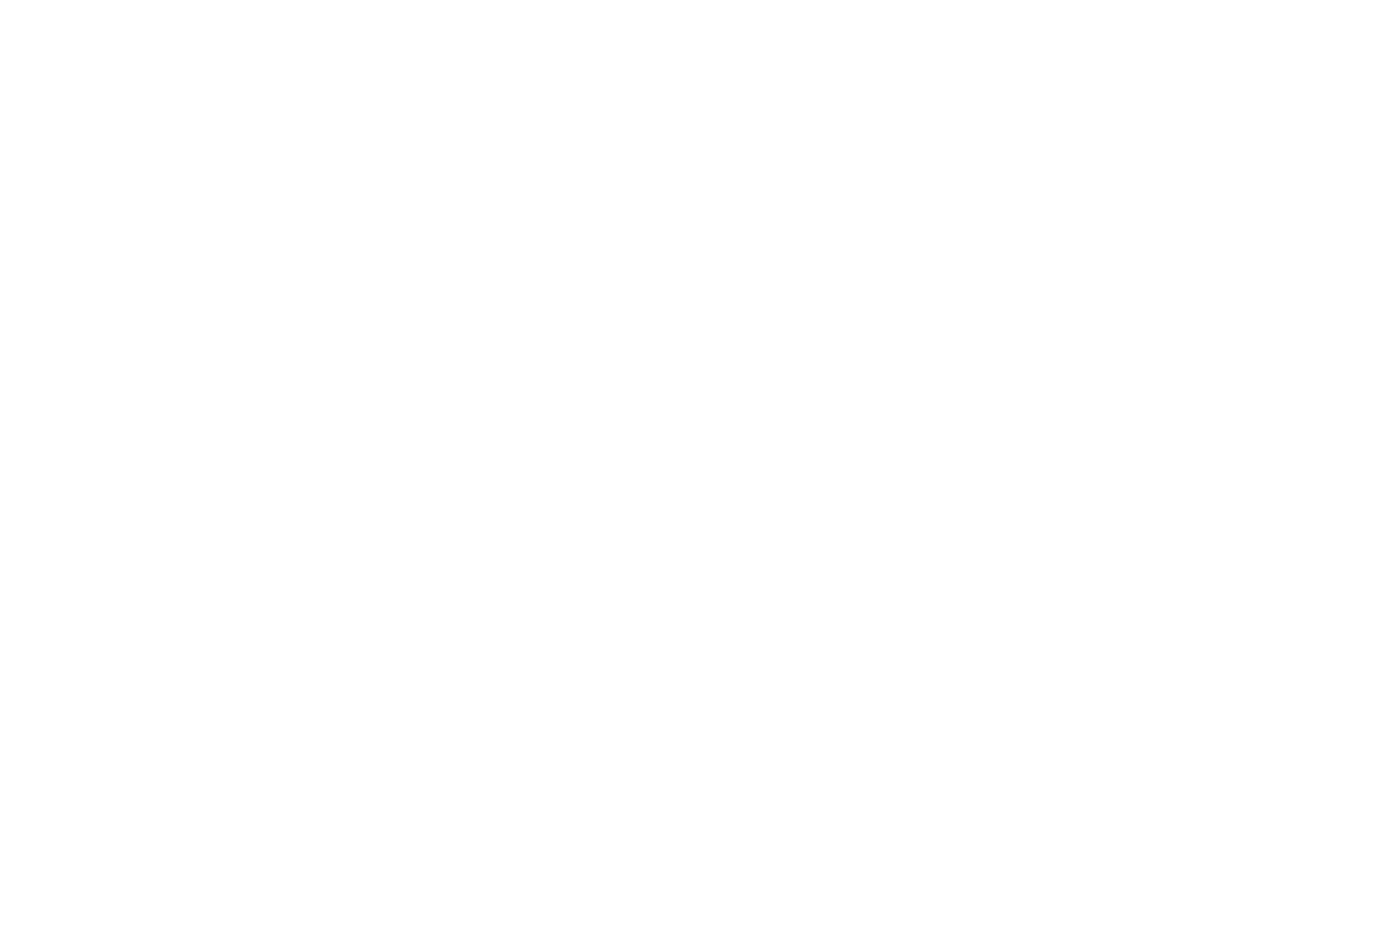 Gordi's Fish & Steakhouse logo